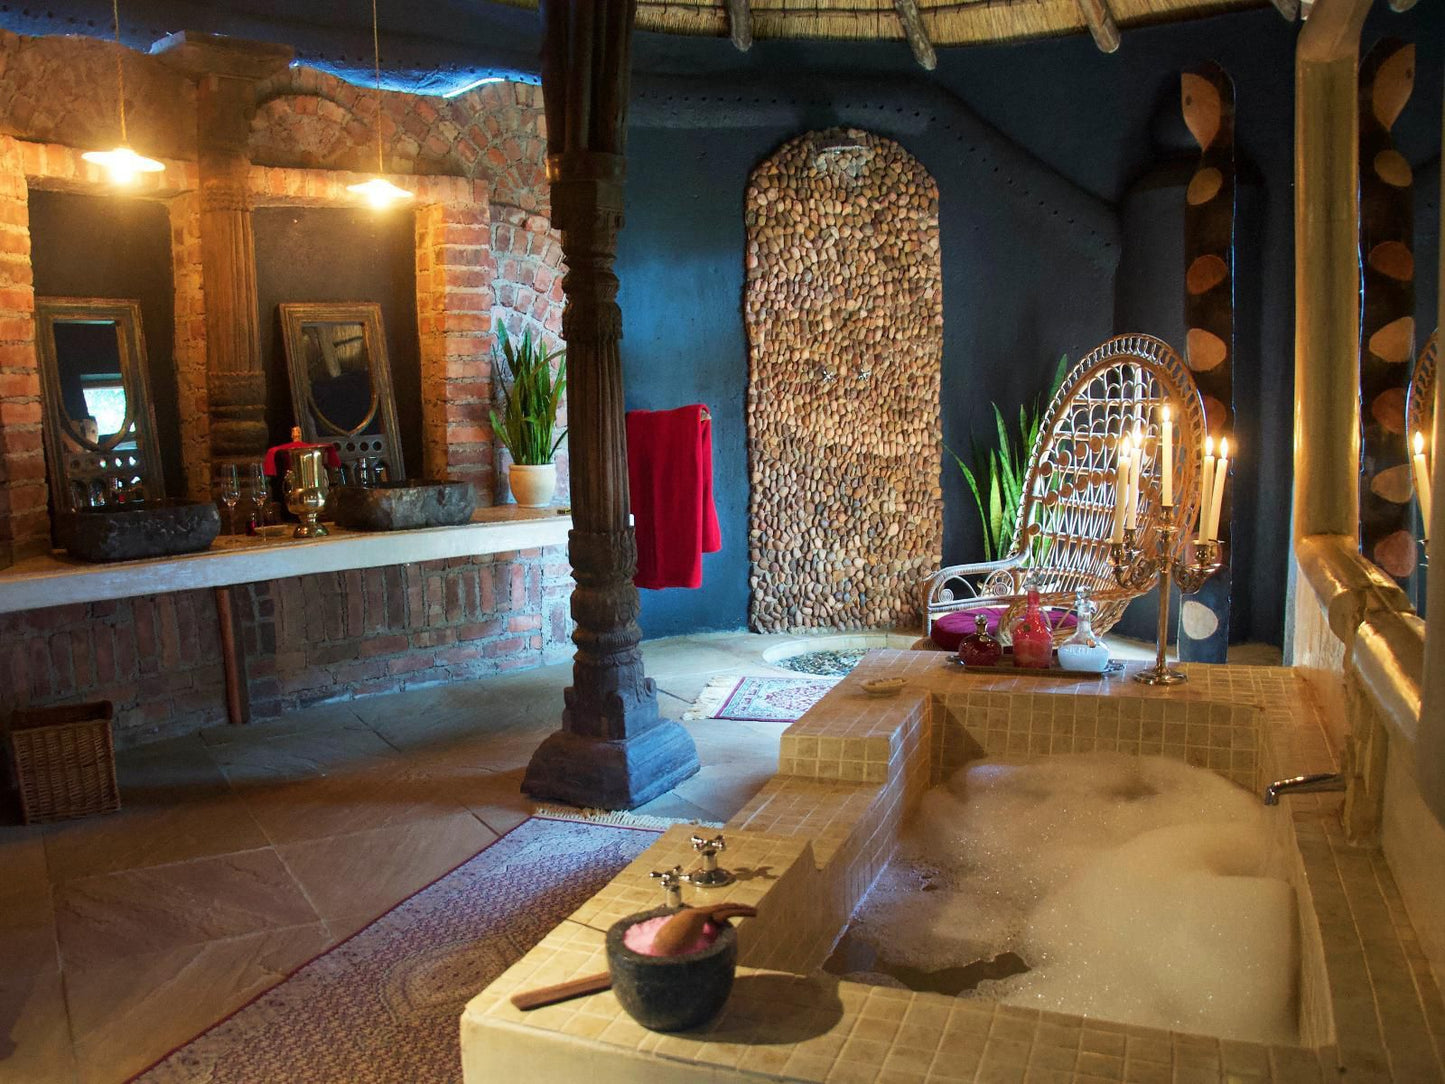 Timamoon Lodge Hazyview Mpumalanga South Africa Fireplace, Sauna, Wood